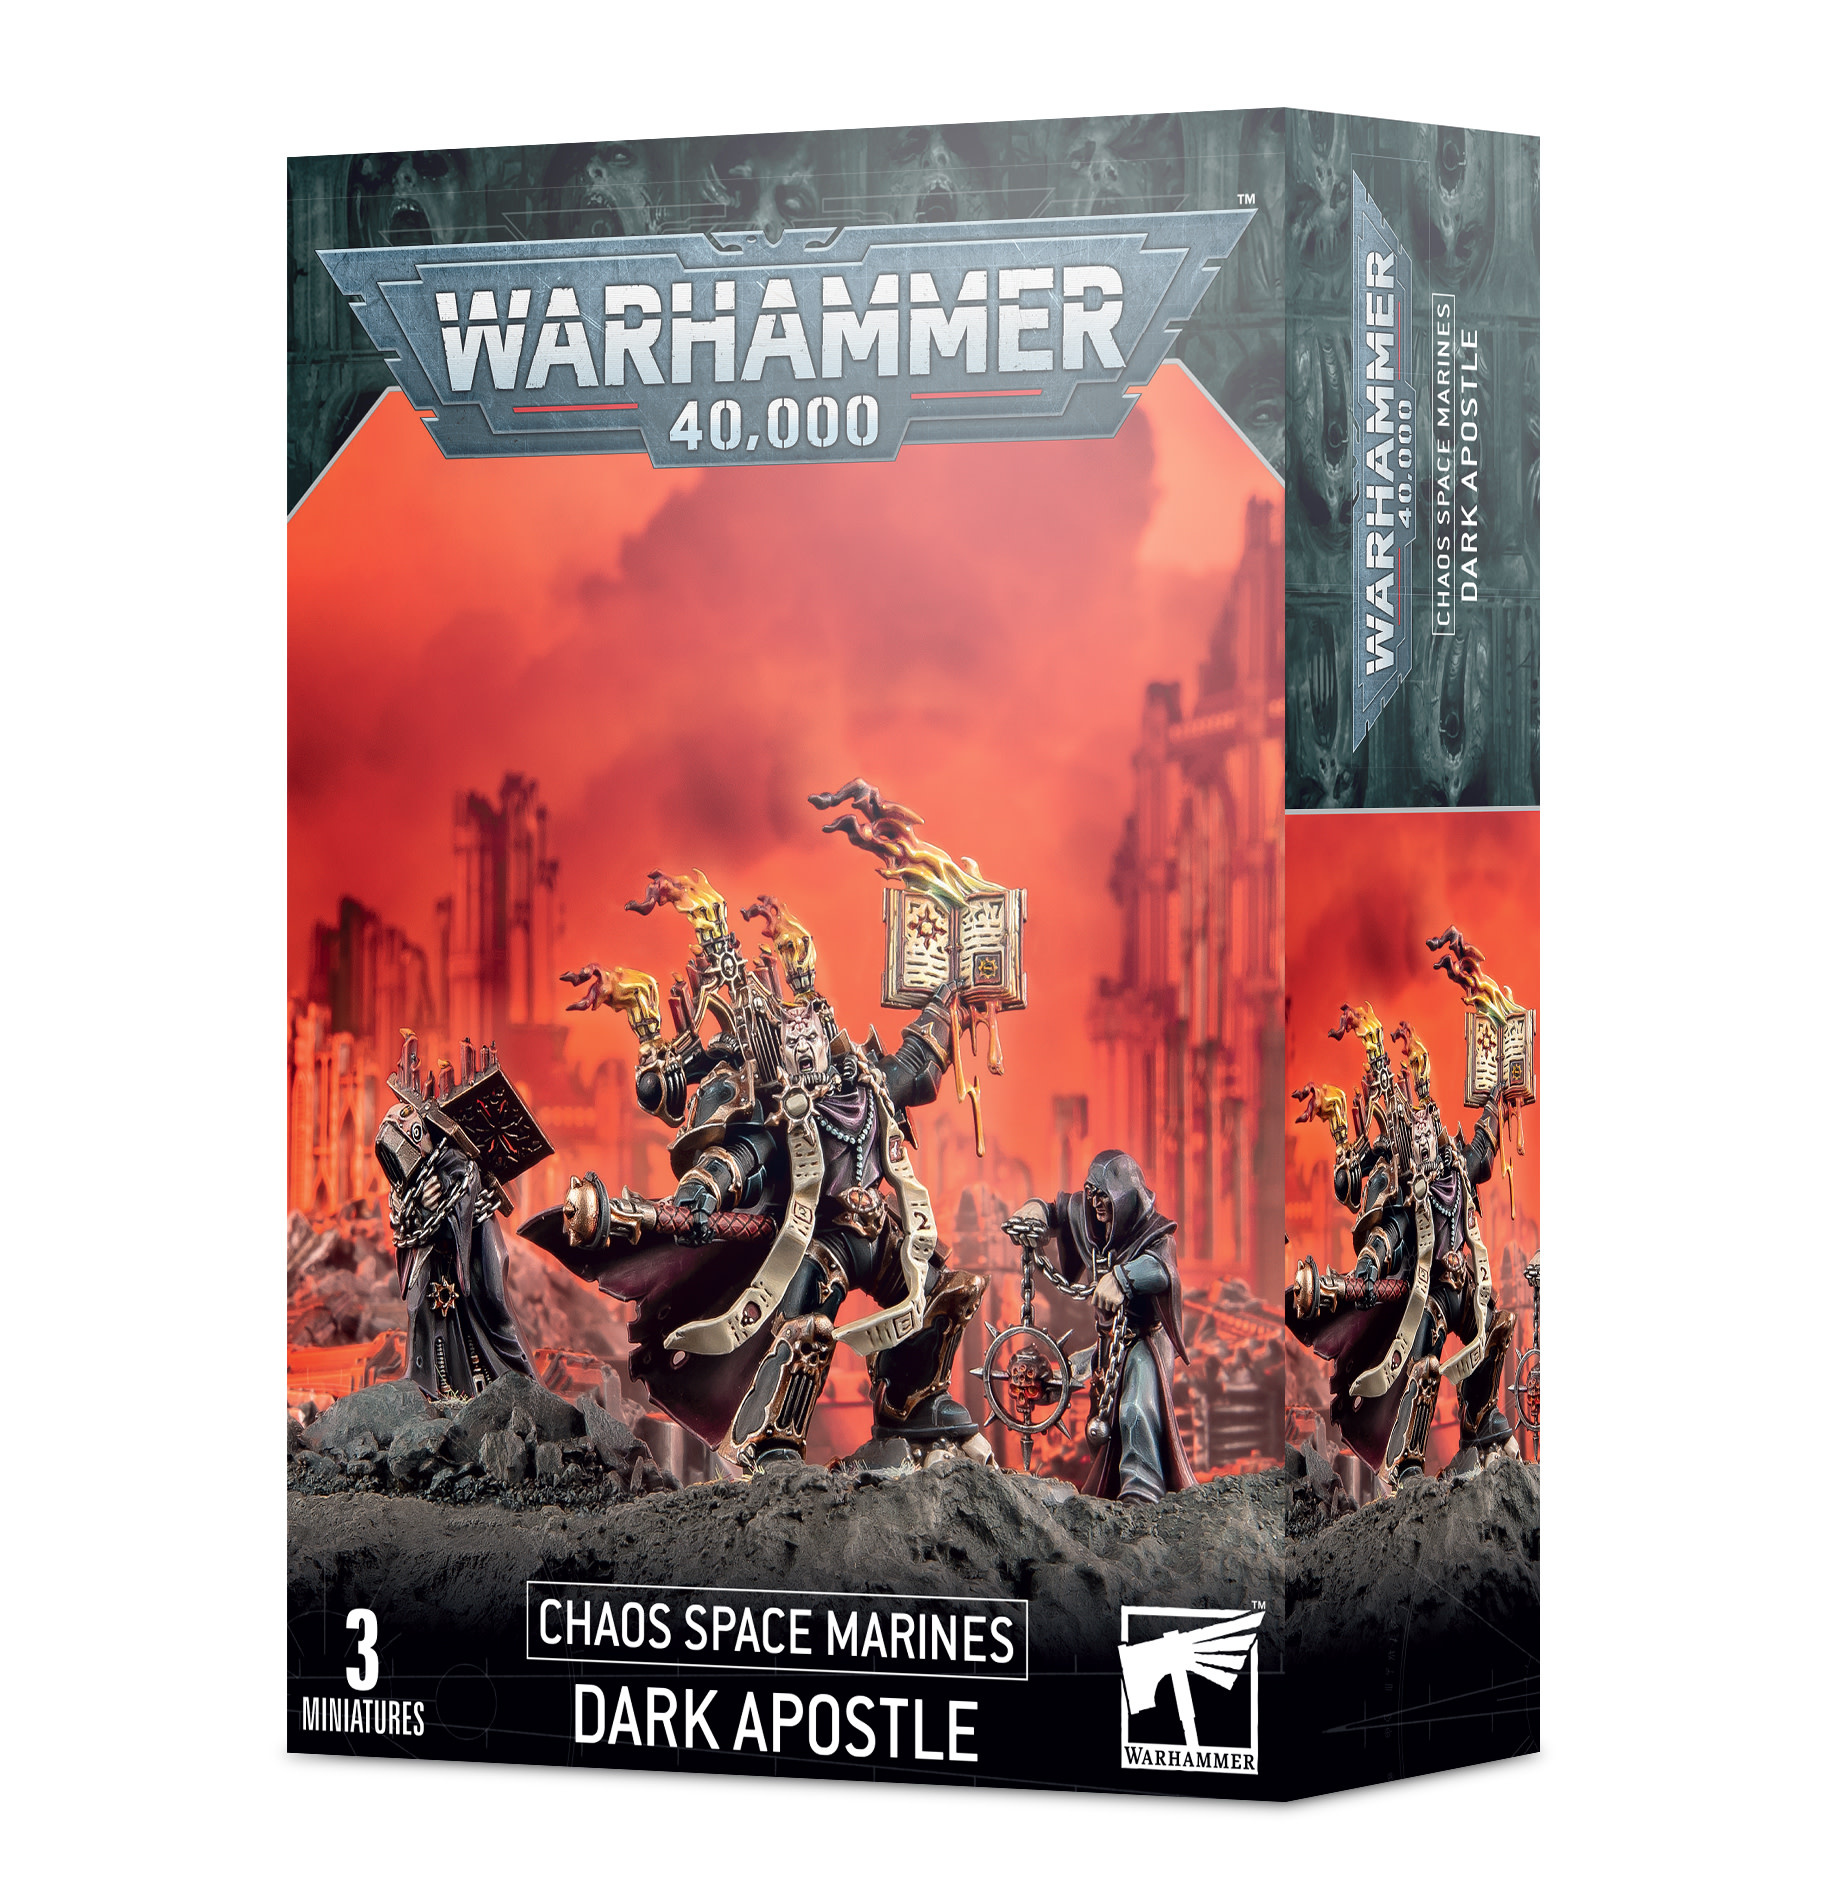 Warhammer 40,000: Chaos Space Marines: Dark Apostle